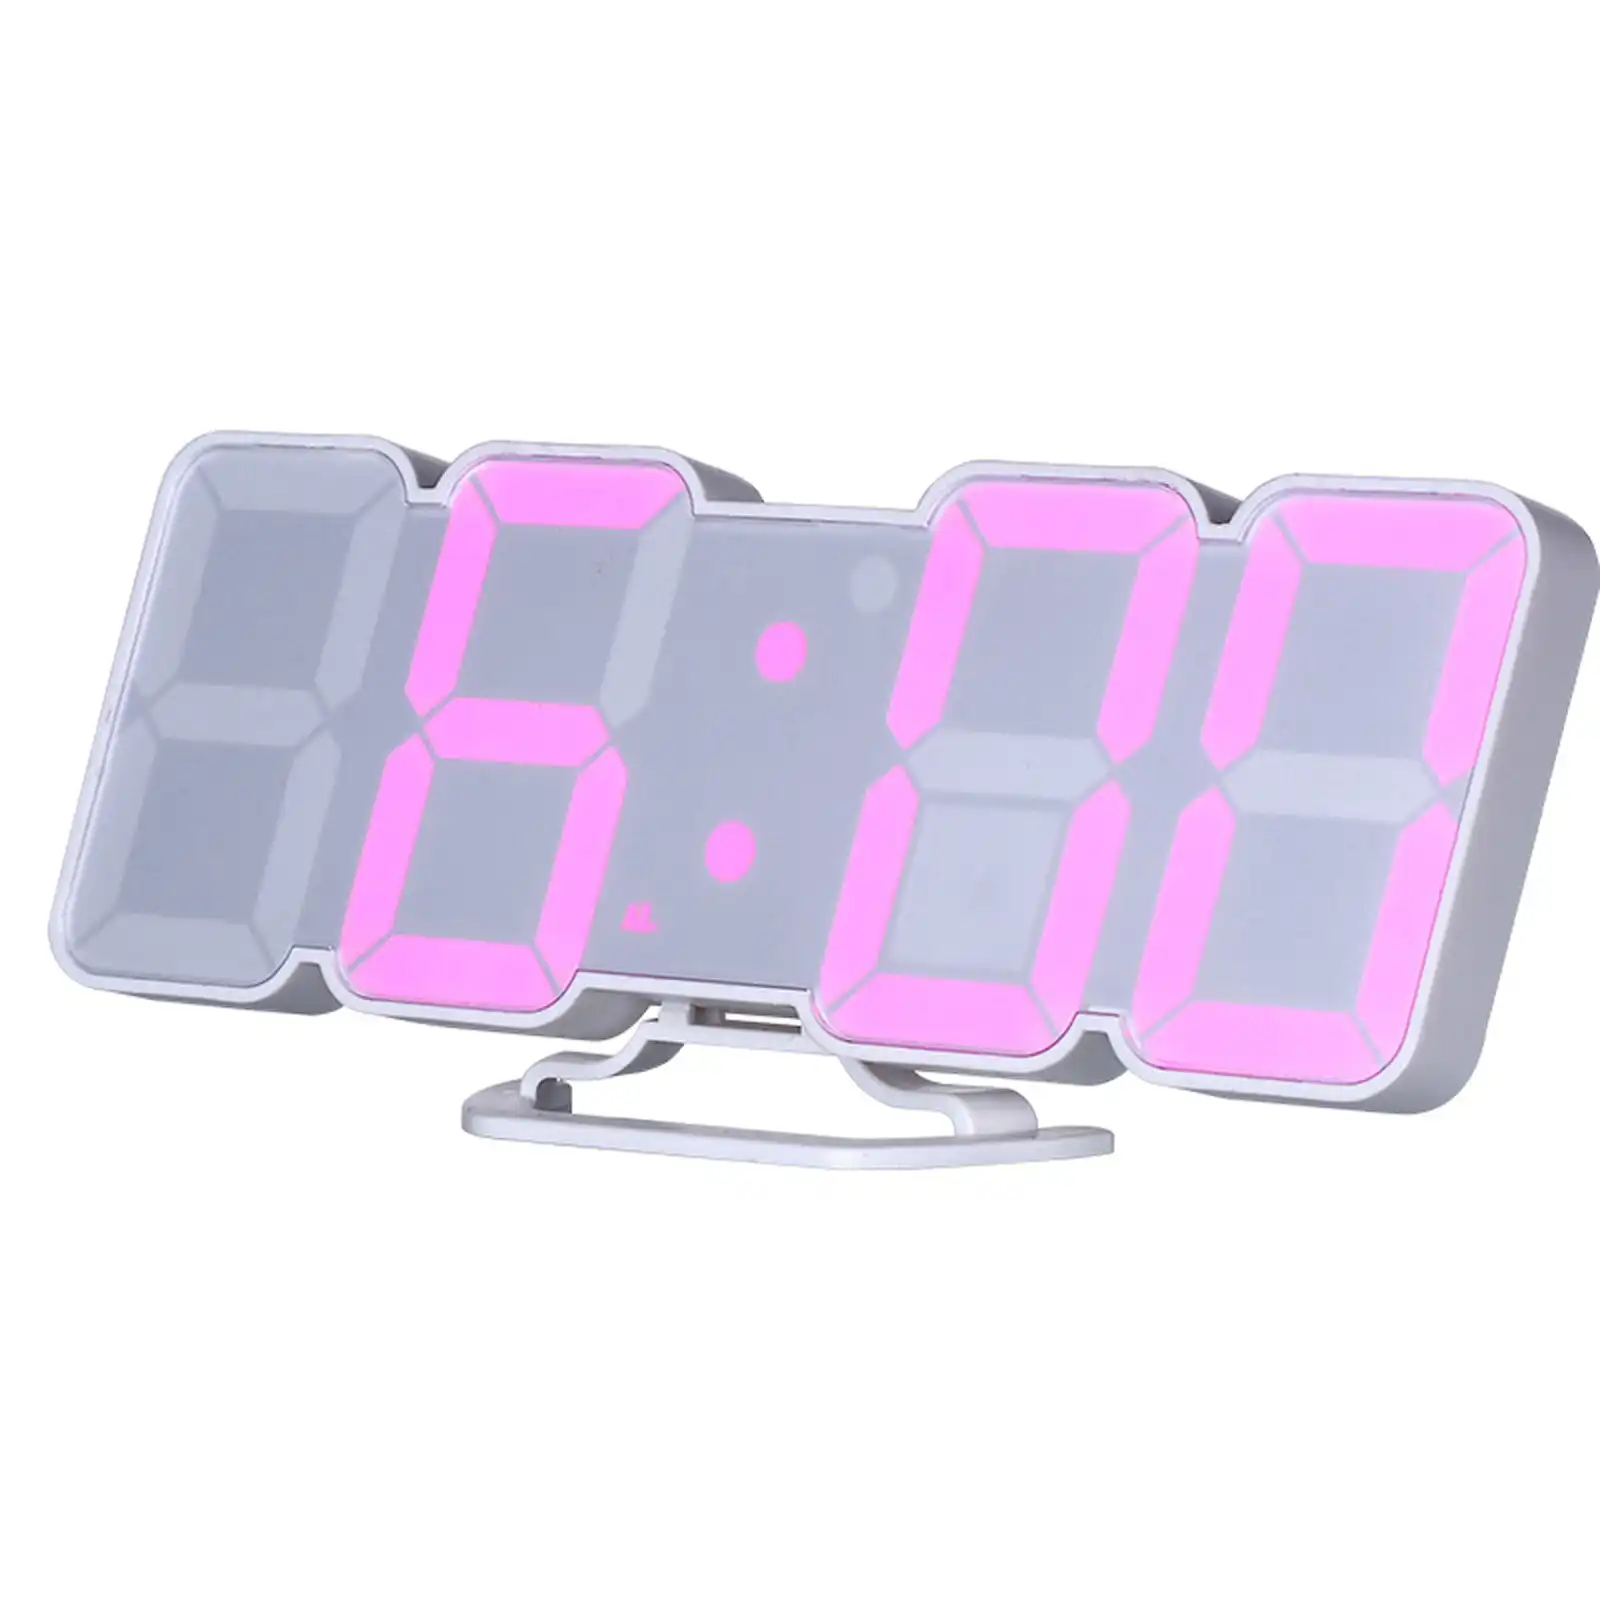 TODO LED Digital Alarm Clock 115 Colour Display USB Power Countdown Timer Remote - White